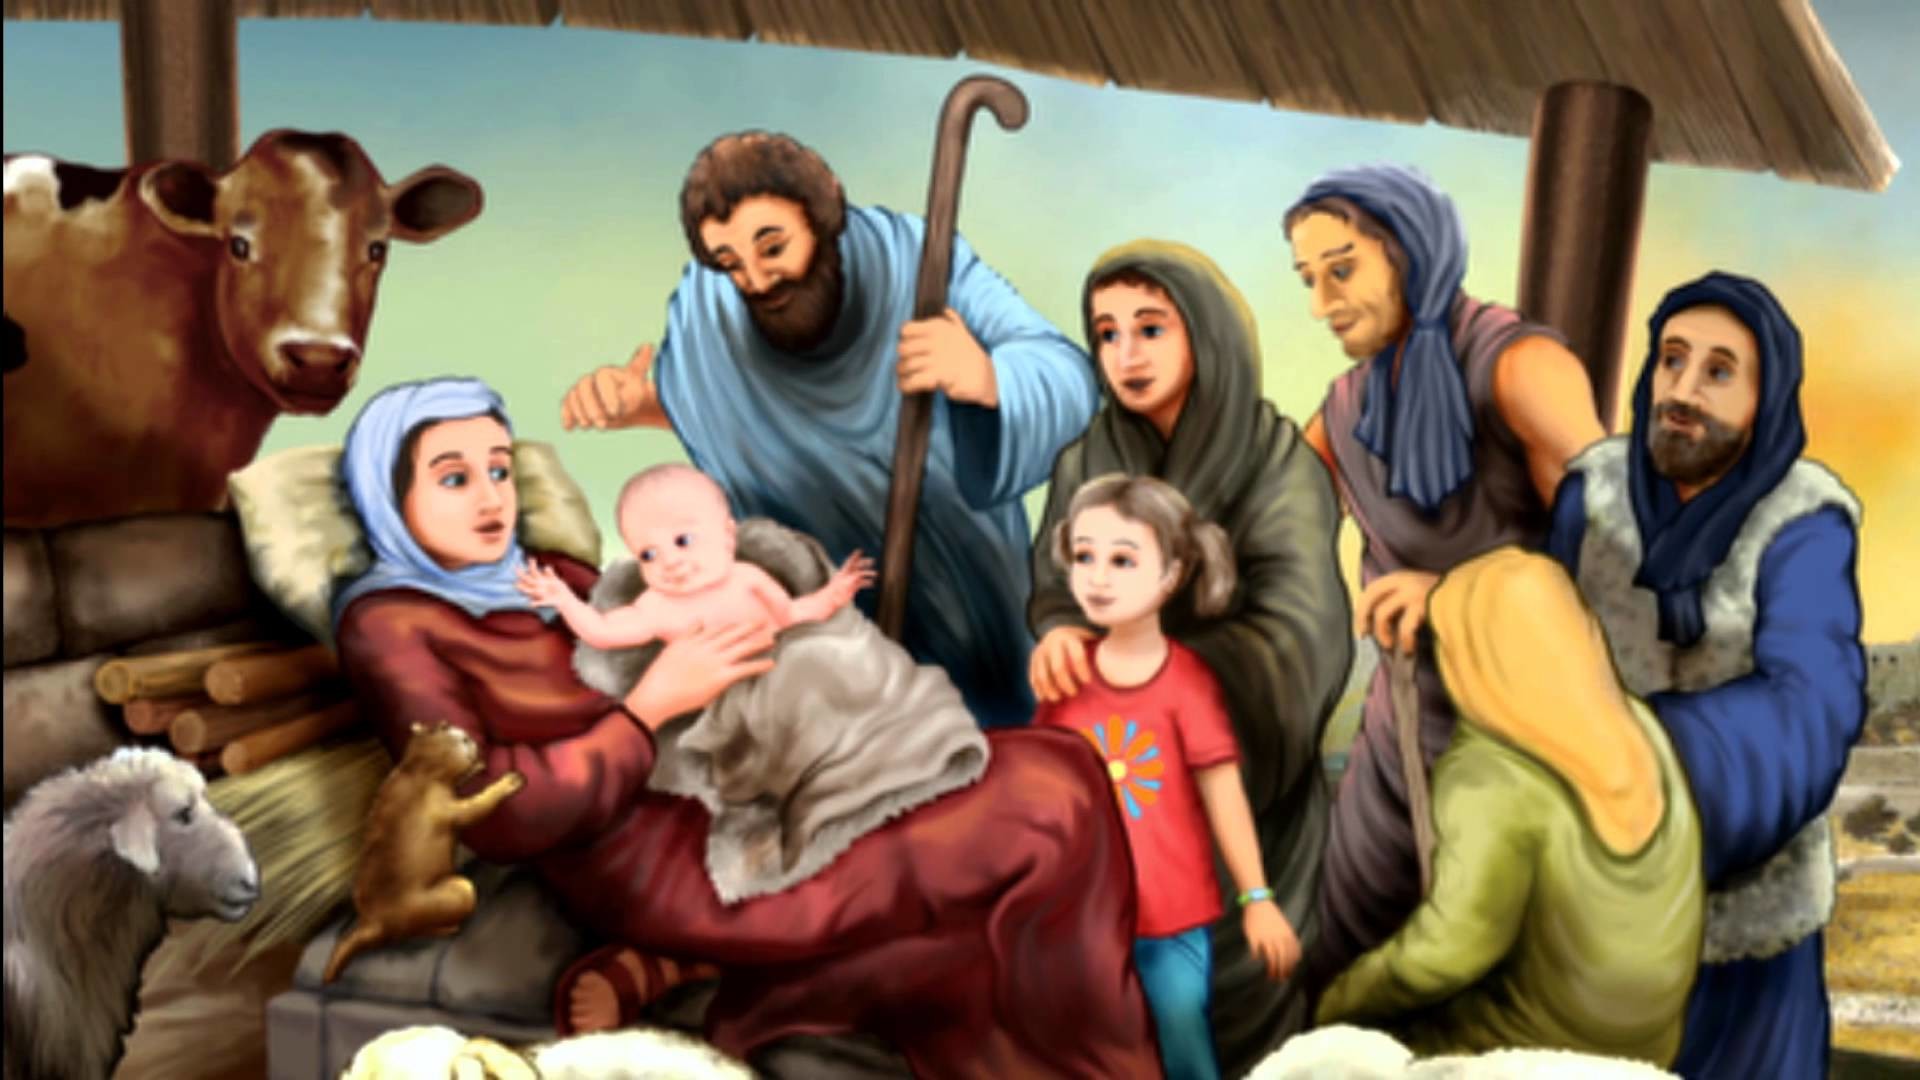 1920x1080 Jesus' Birth in Bethlehem -New Children Book - YouTube